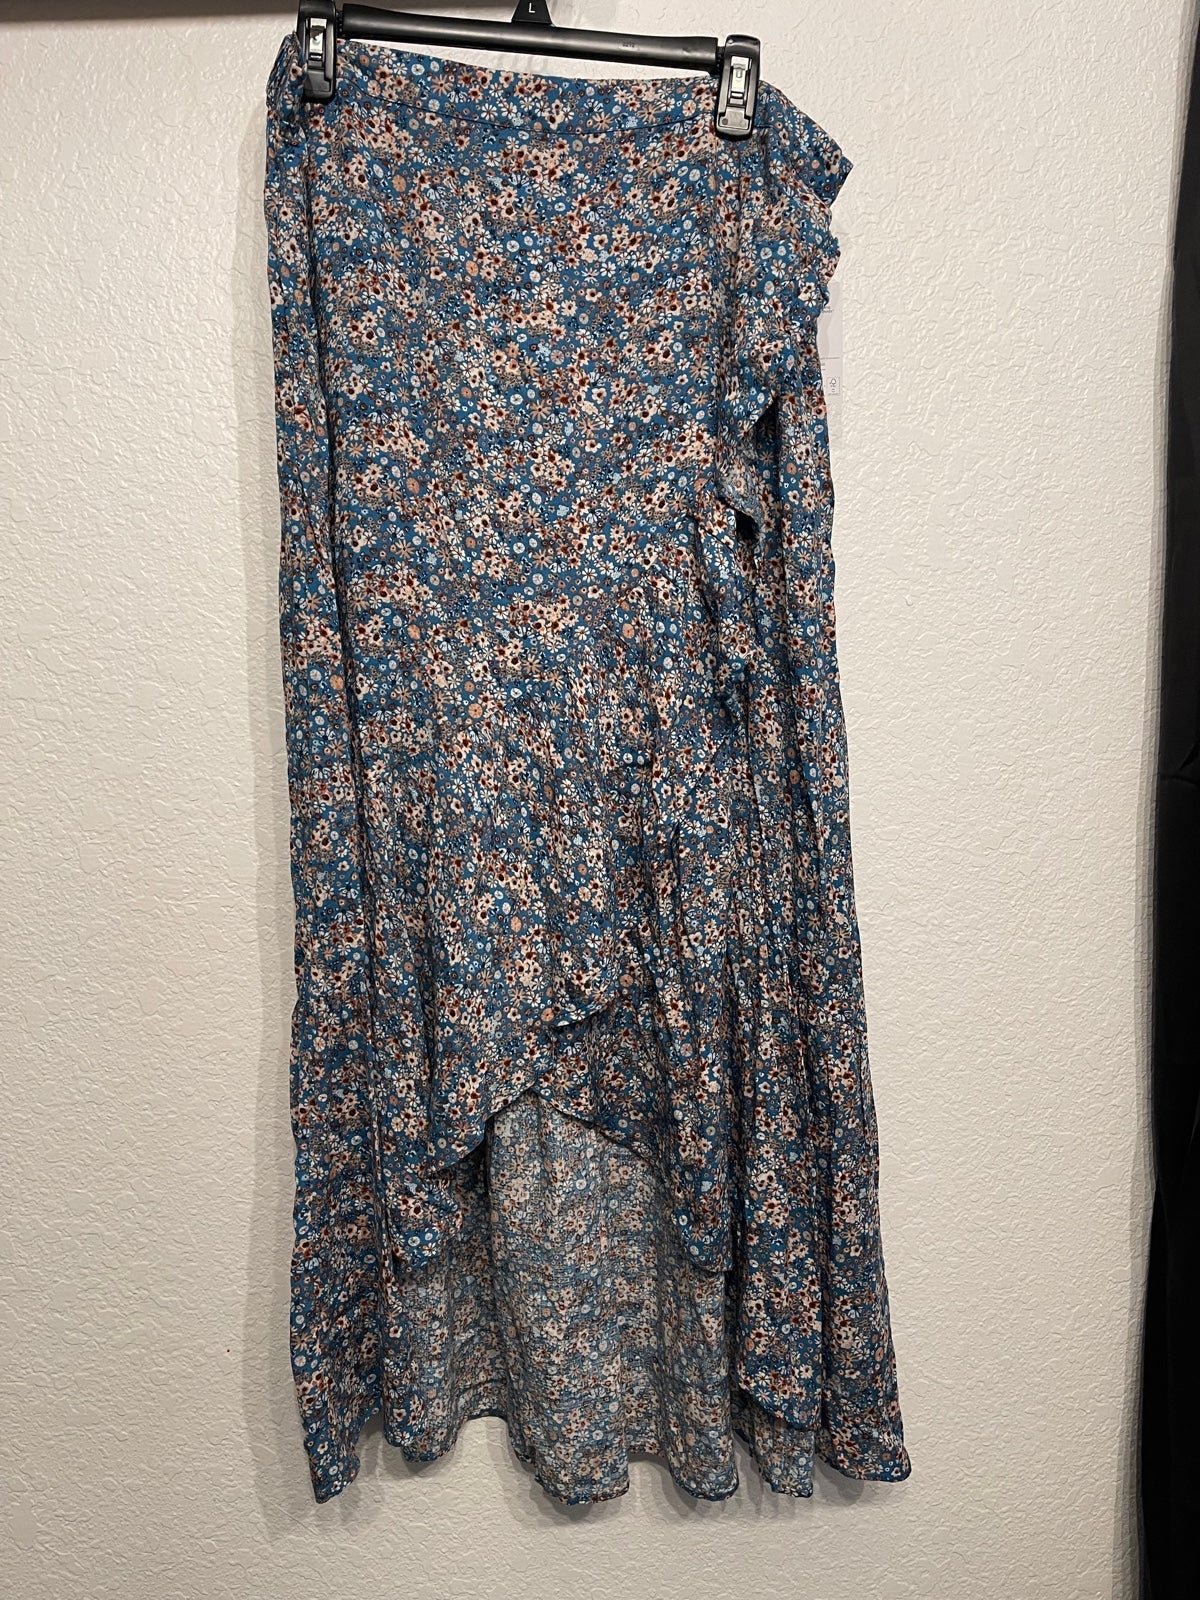 Perfect Floral High Low Skirt hI4DVveQq Wholesale